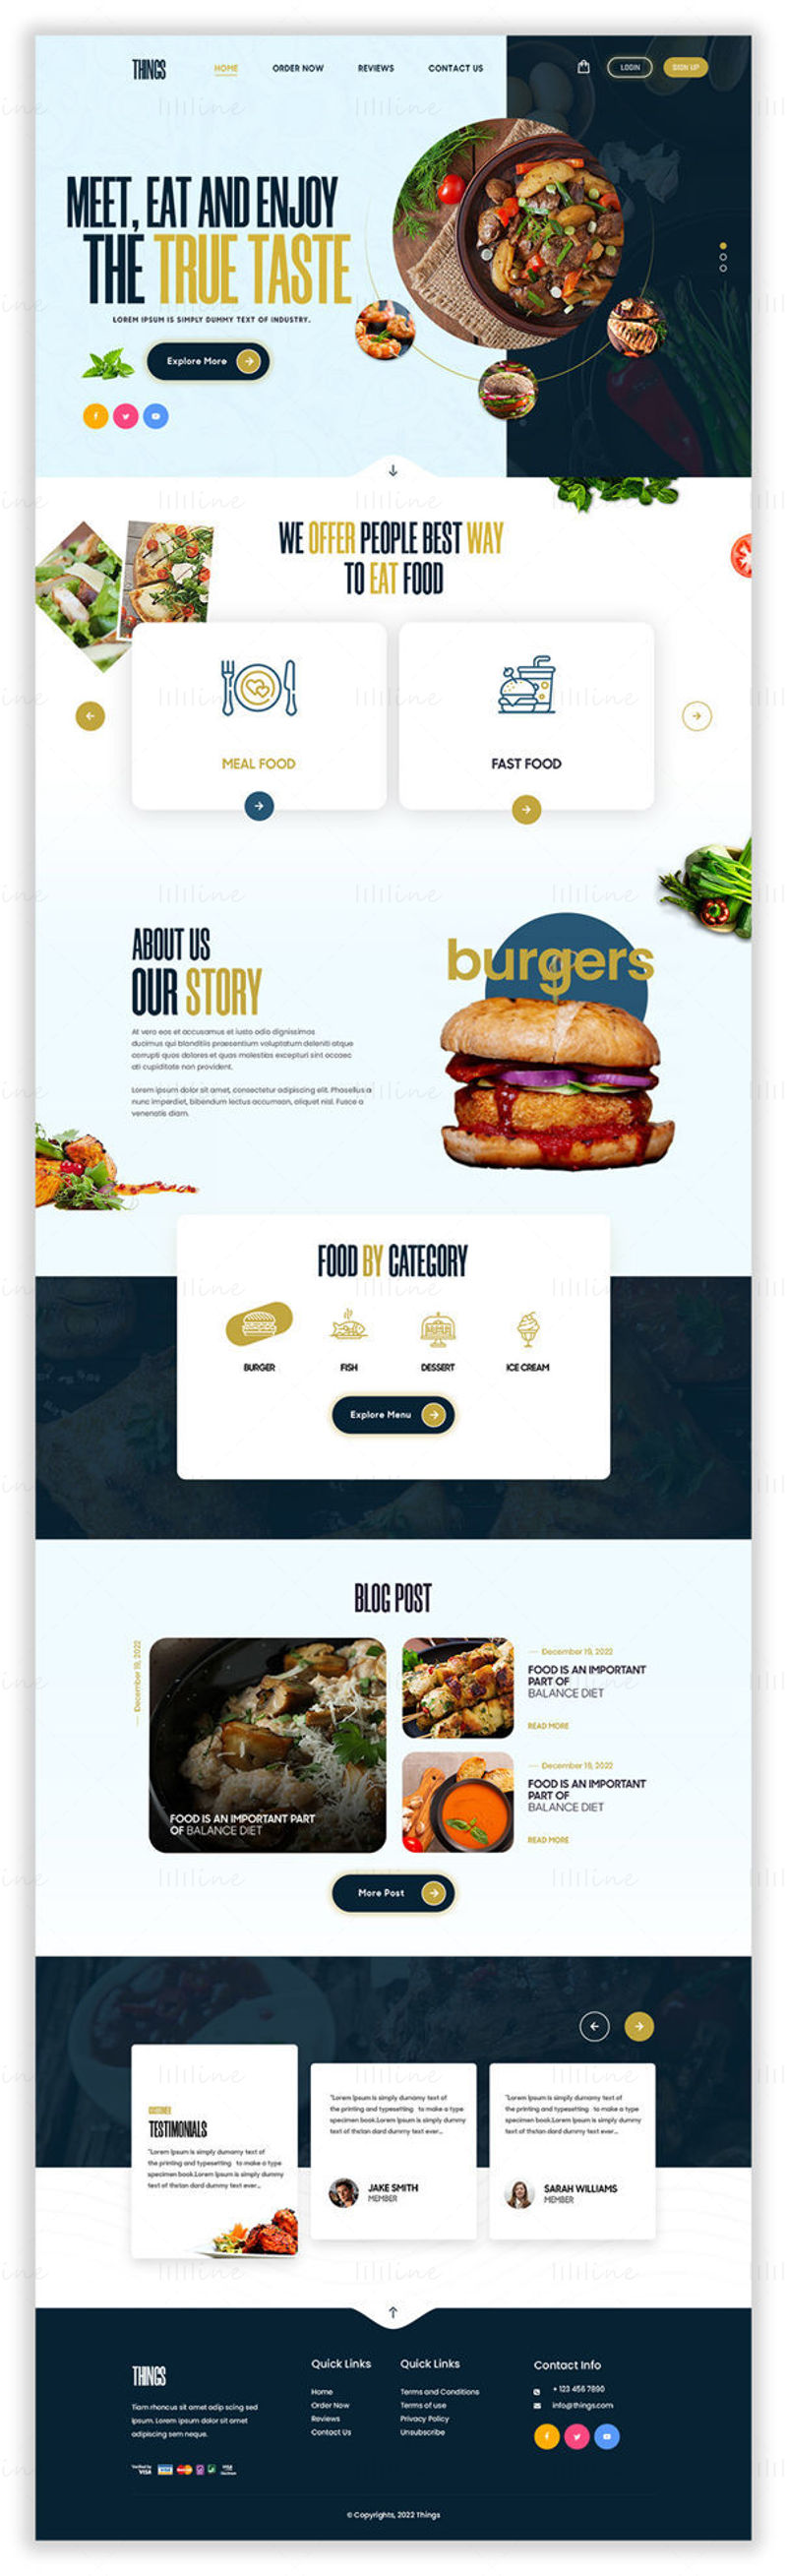 Things食物食品公司餐厅网站着陆页外卖送餐模板 - UI Adobe Photoshop